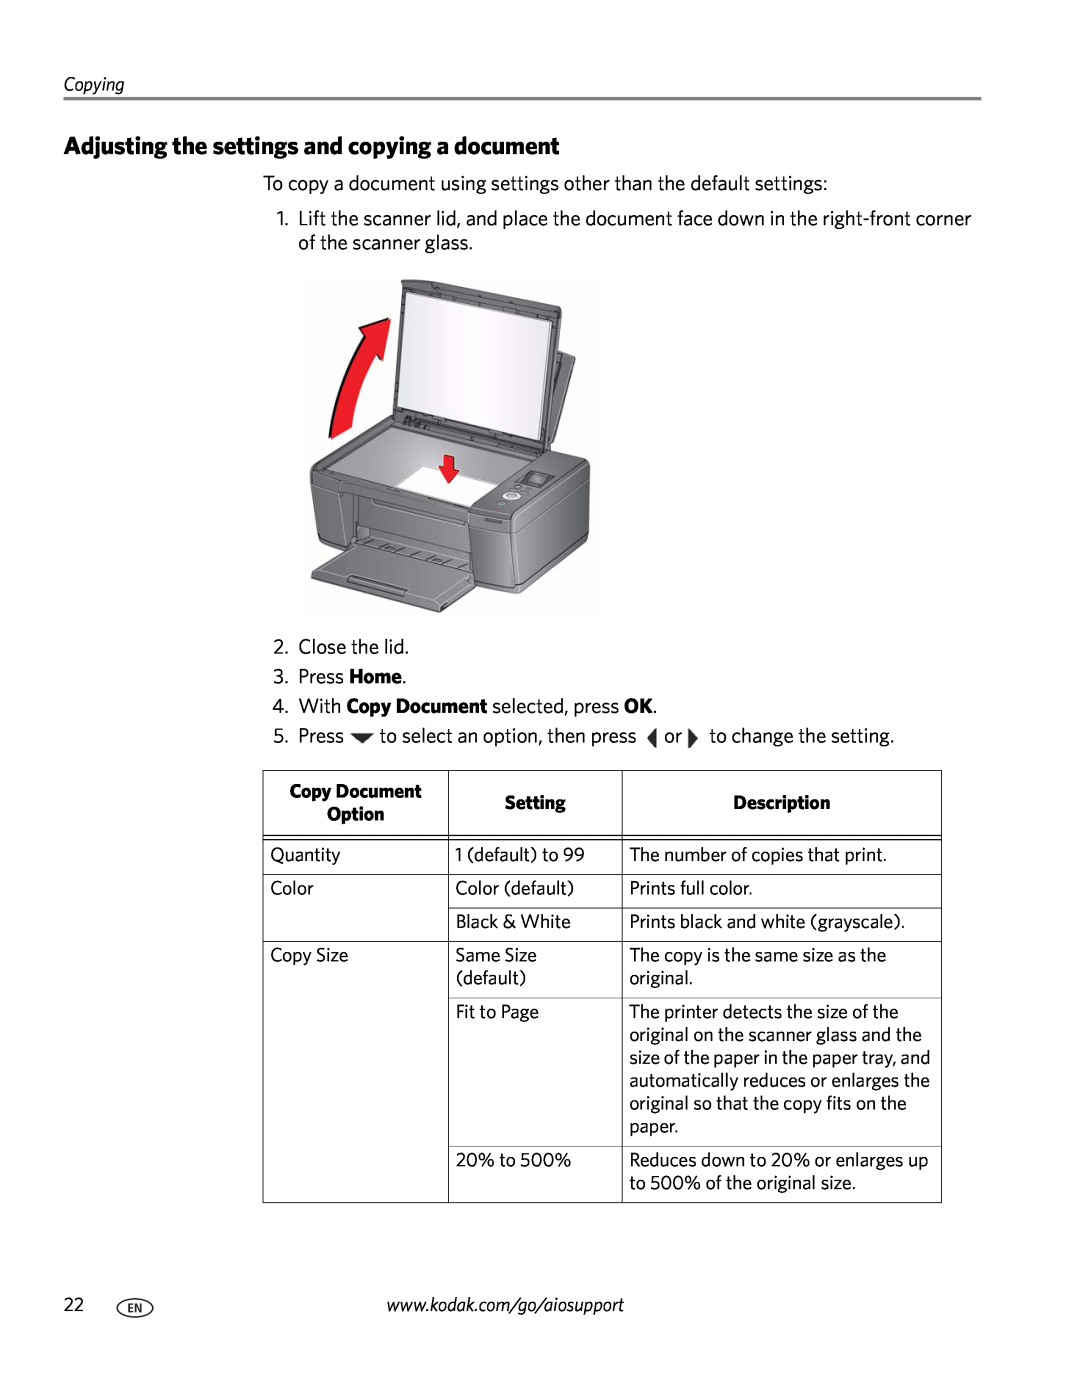 Kodak C110 manual Adjusting the settings and copying a document, Copying 